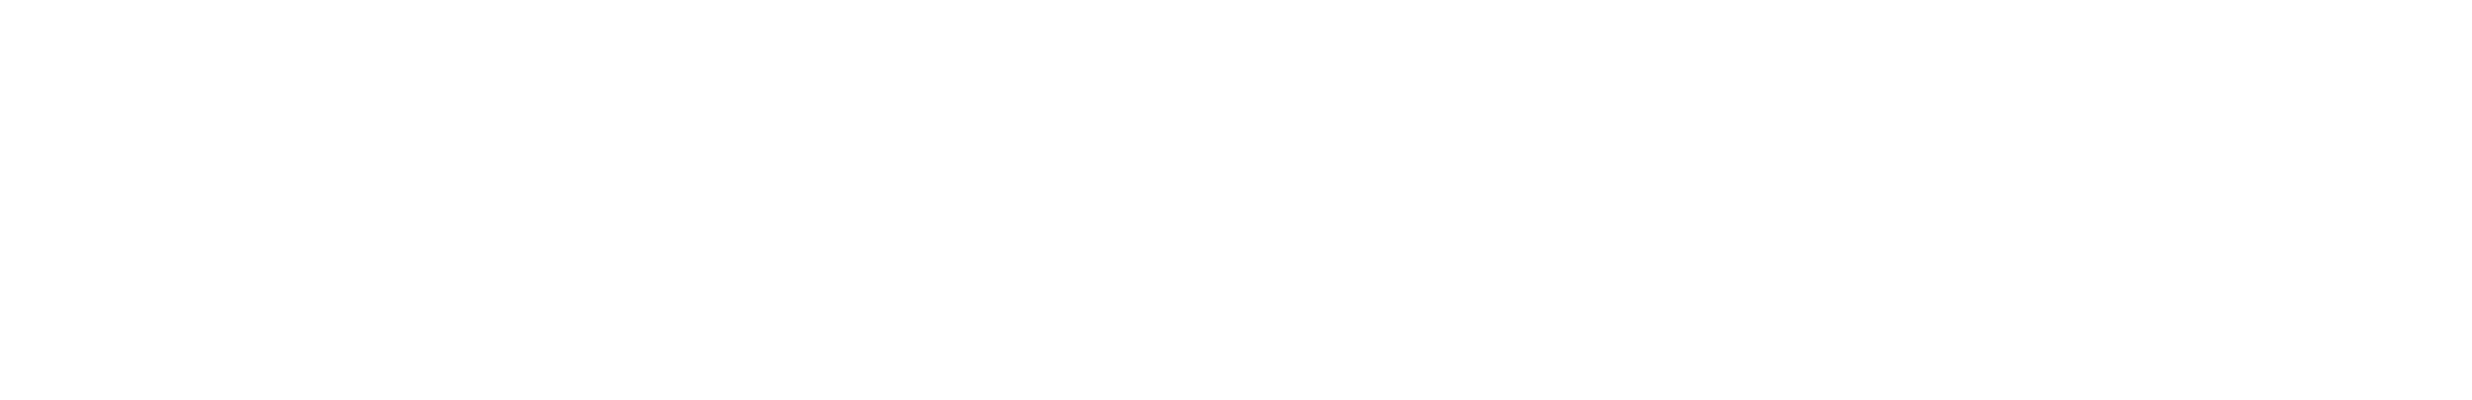 Paradox Agency